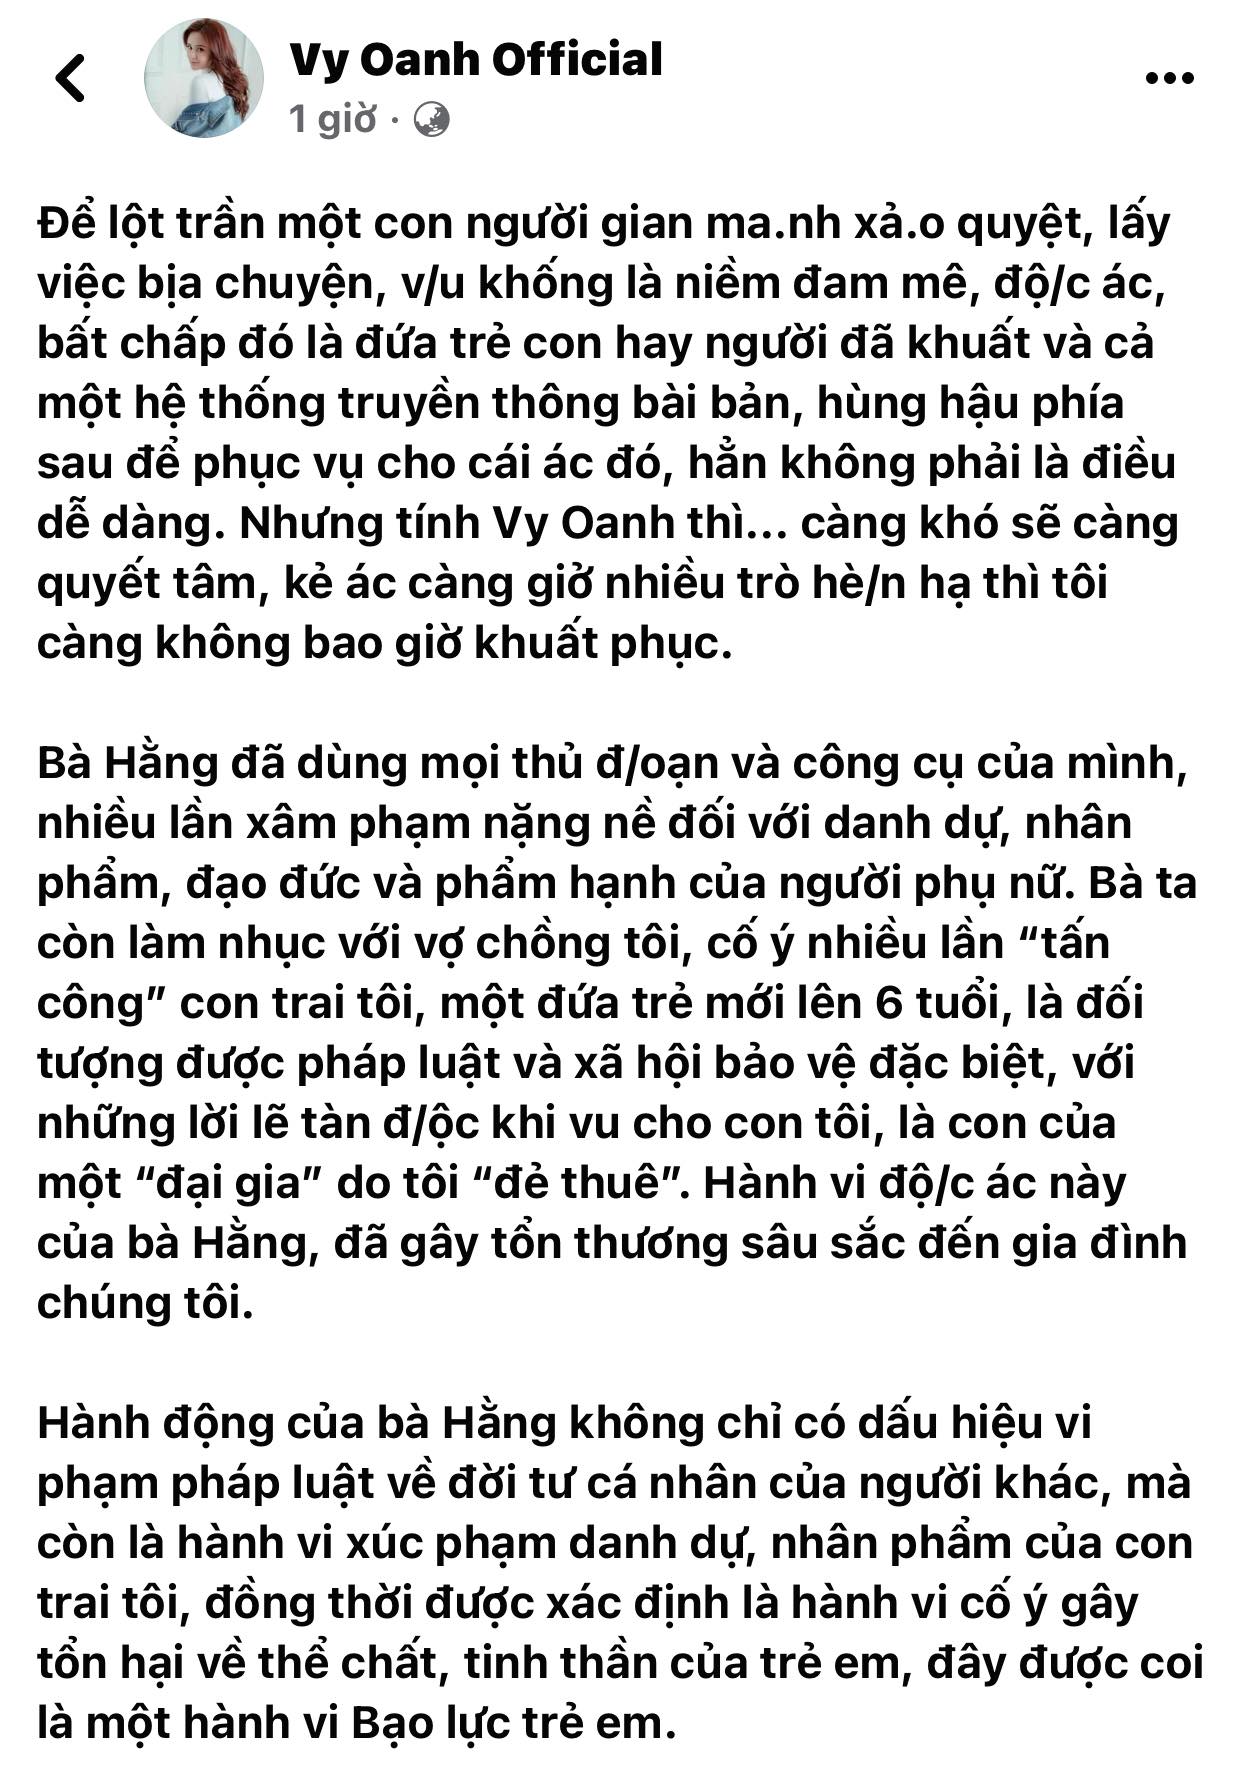 Vy-oanh-thong-bao-tin-vui-ve-viec-khoi-to-ba-phuong-hang-va-tiet-lo-phan-hoi-cua-cong-an-tp-hcm-1